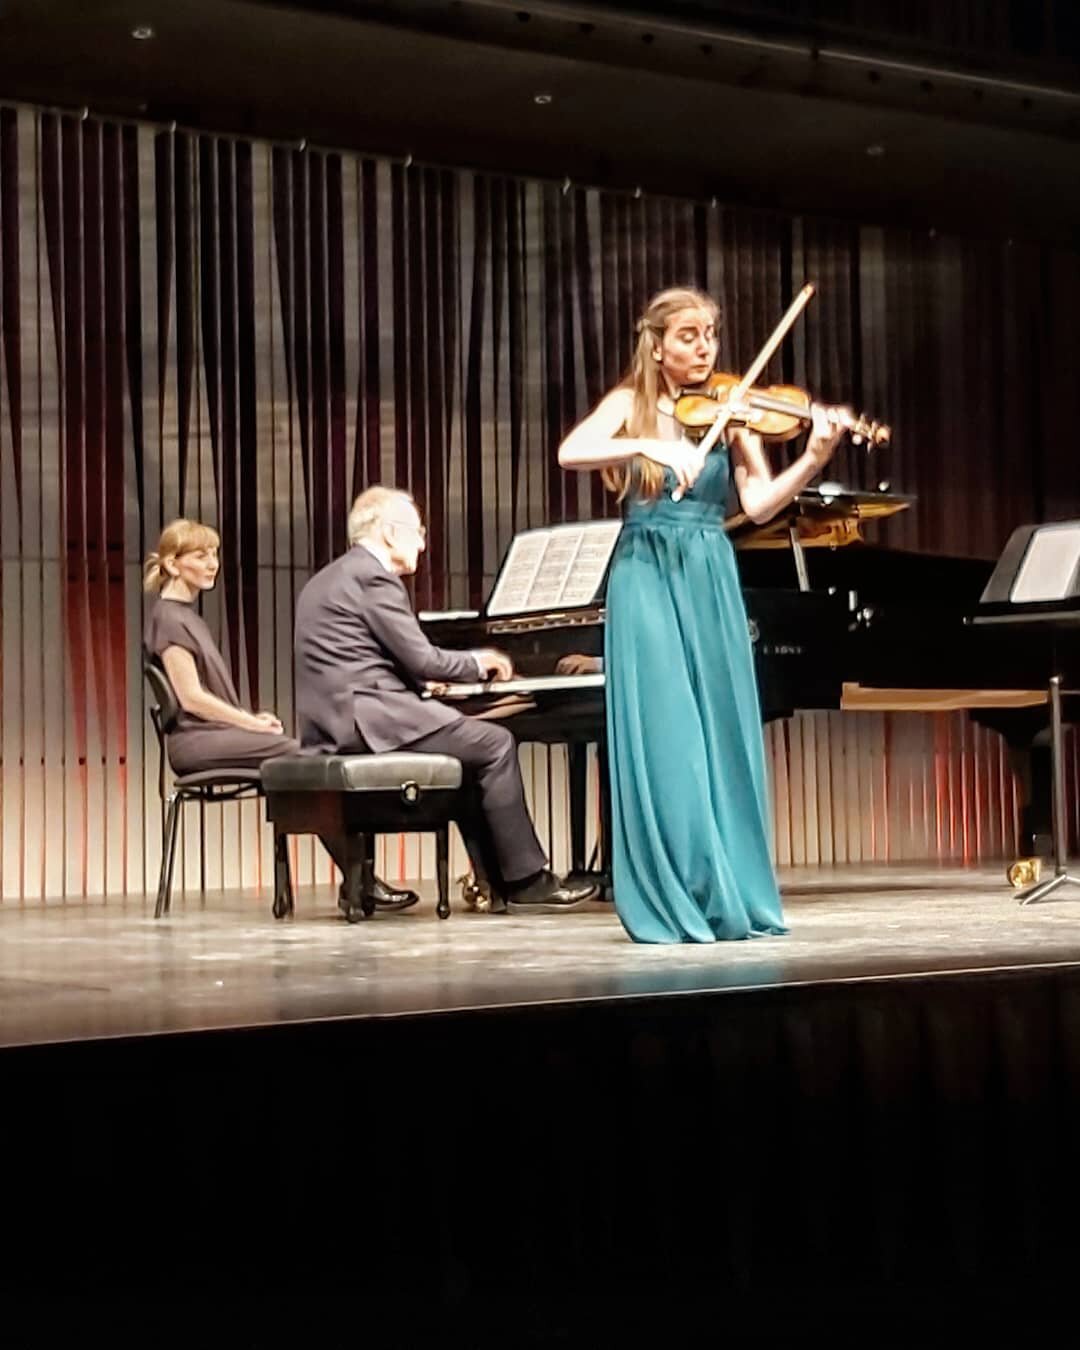 Wonderful concert with Diana Adamyan, violin and Richard Simm, piano tonight. #himafestival2019